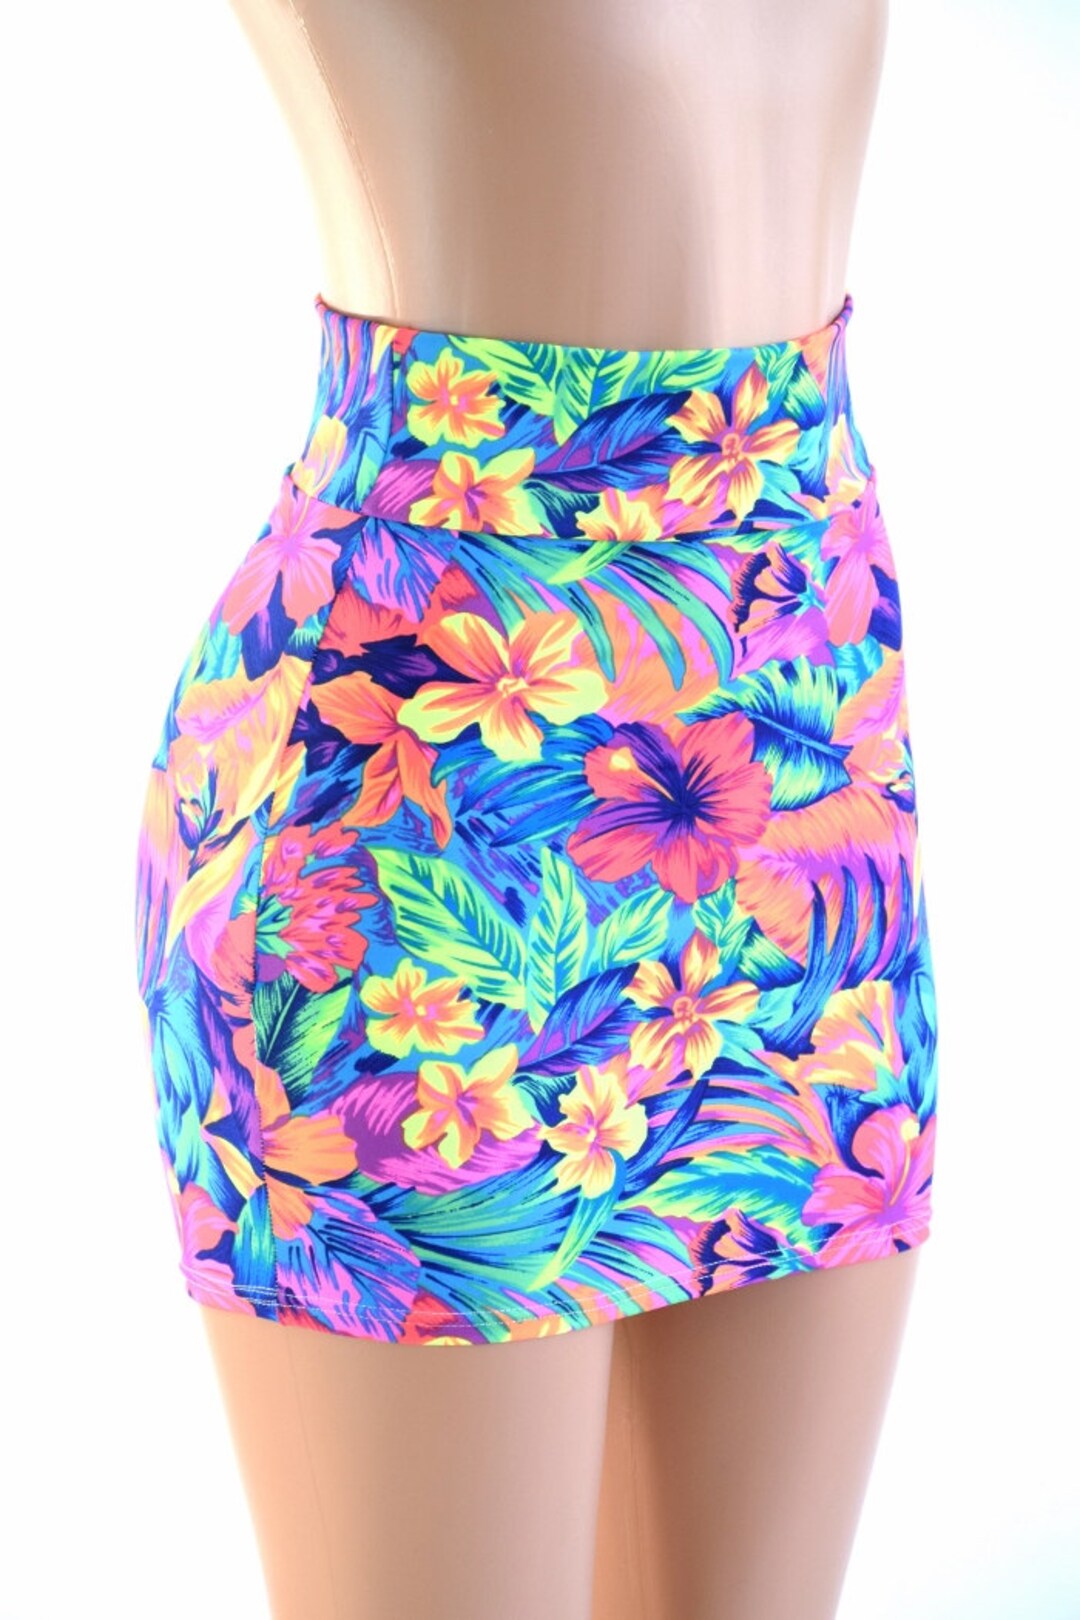 Tahitian Floral Neon UV Glow Stretchy Spandex Bodycon Skirt 16 Length ...